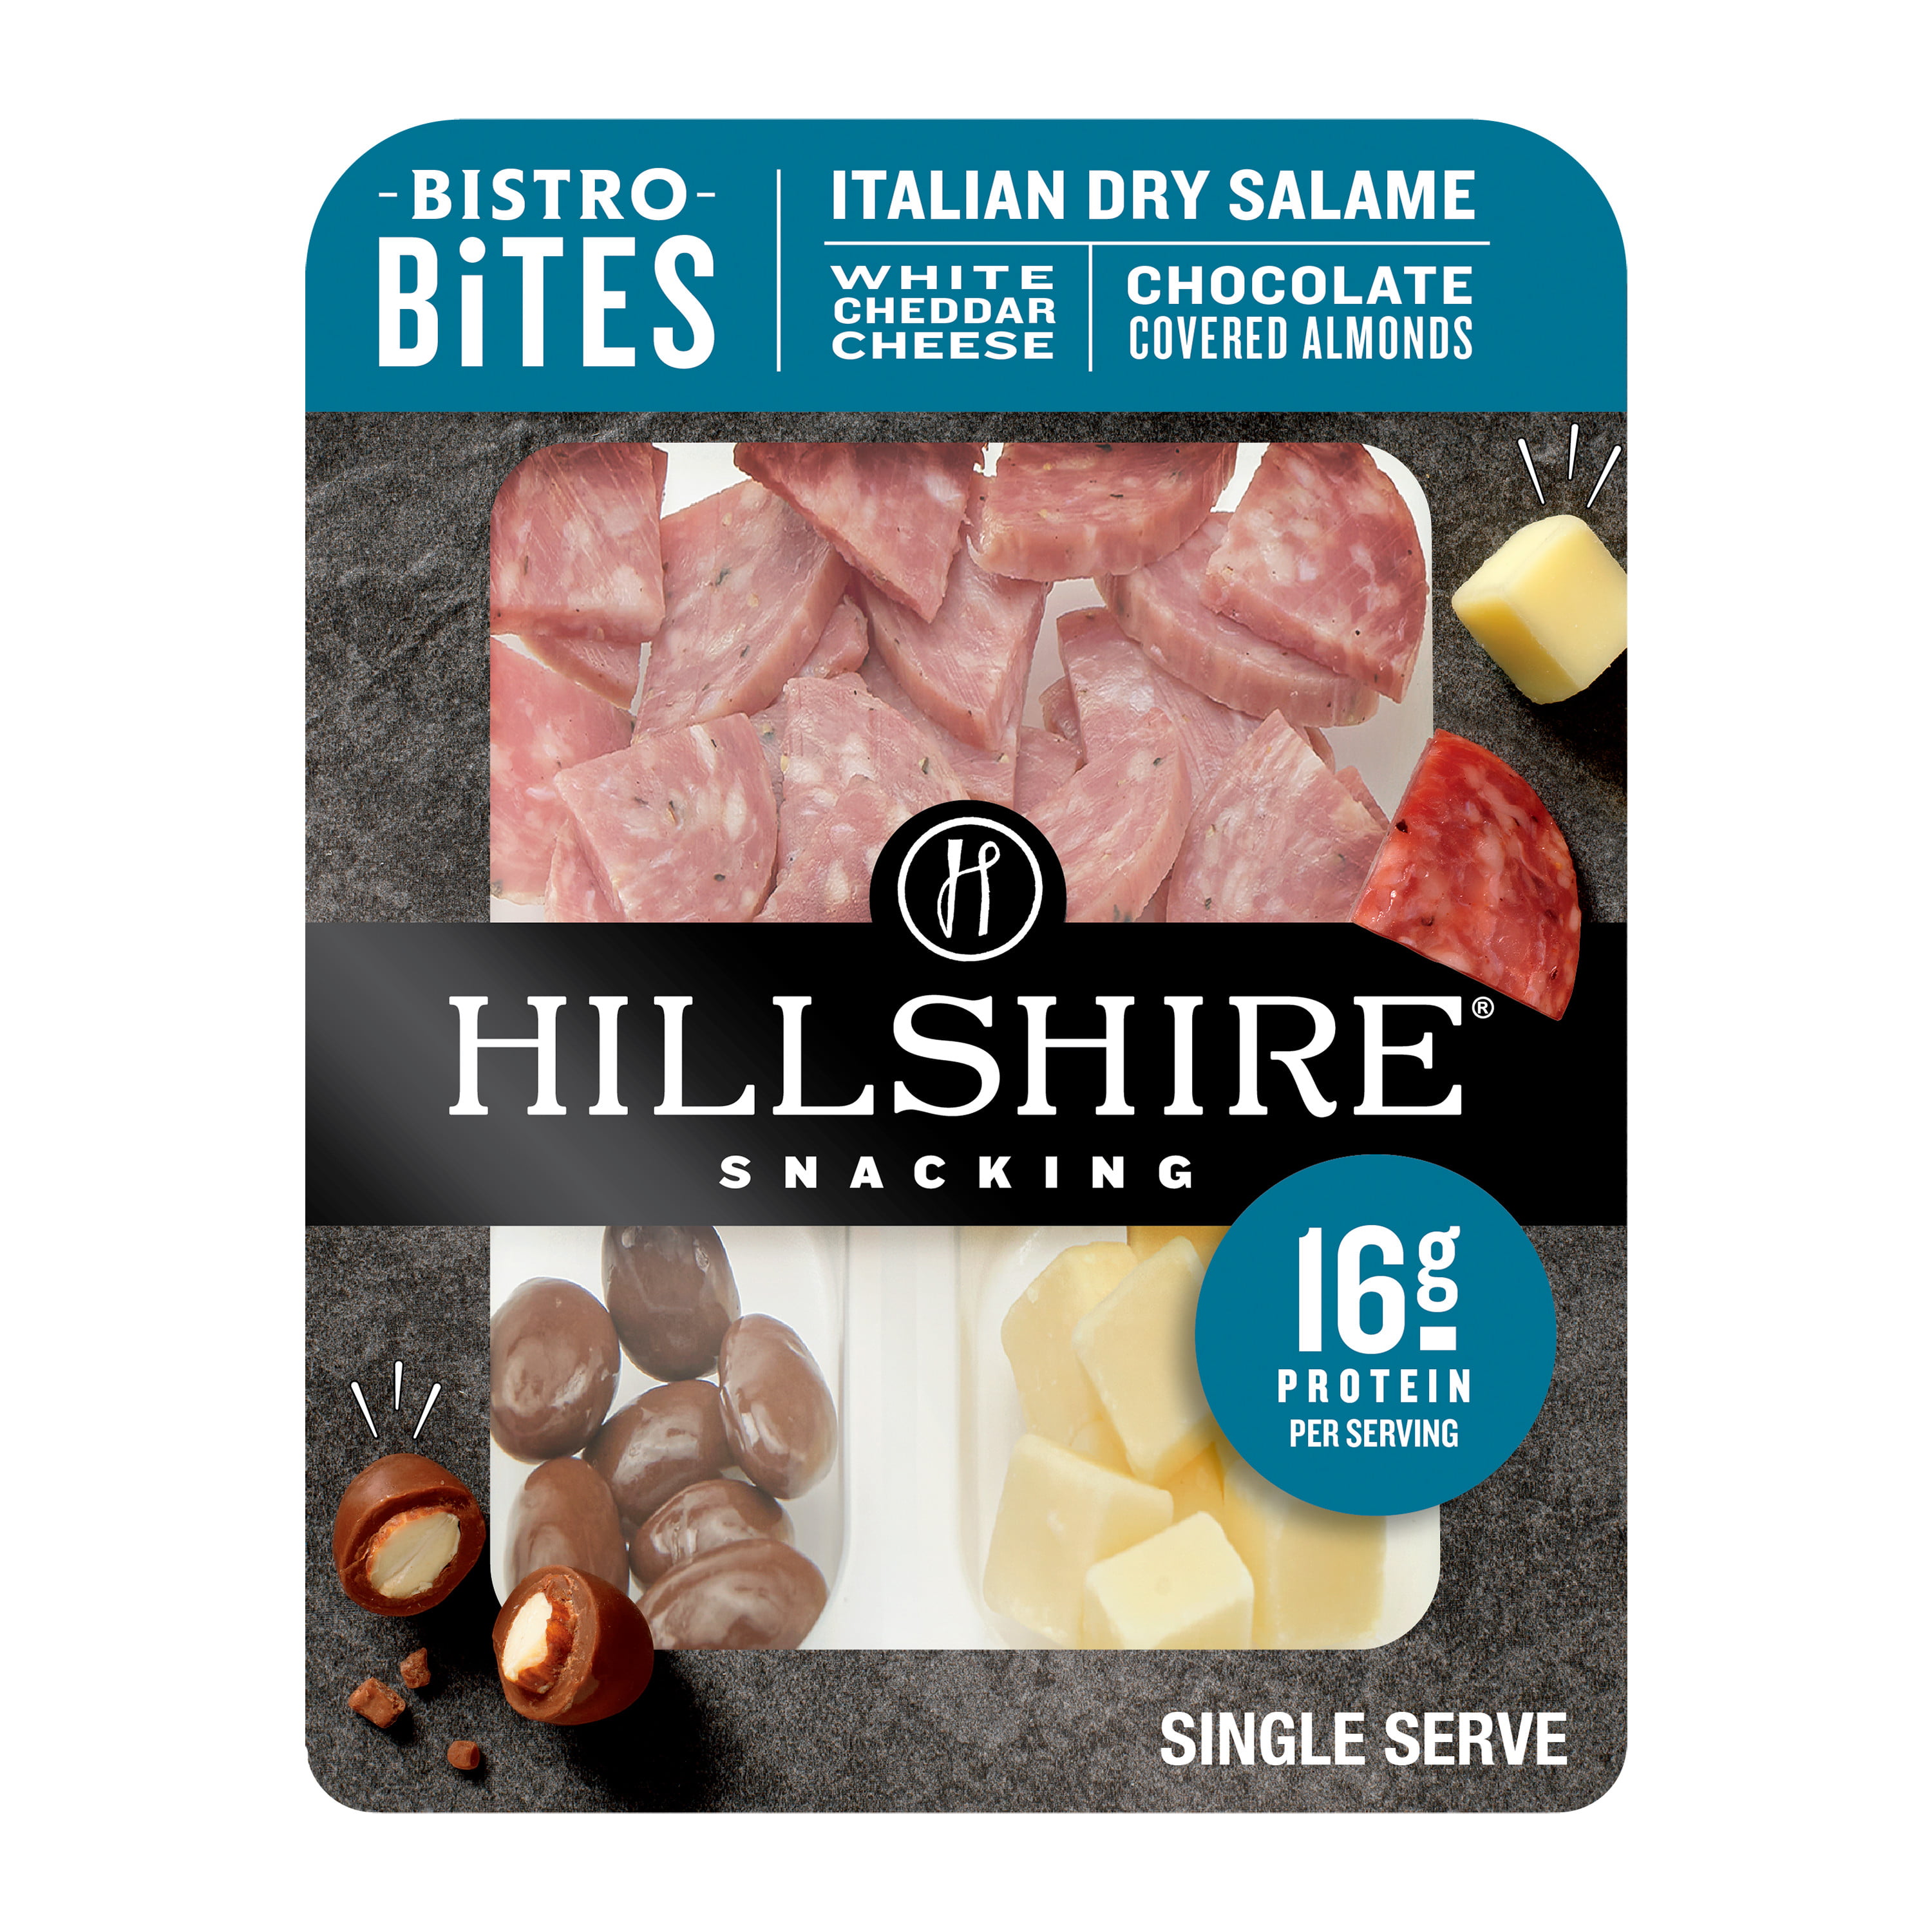 Hillshire Snacking Bistro Bites Salami, Cheddar Cheese & Chocolate Almonds, 2.8 oz Snack Box, 1 Count